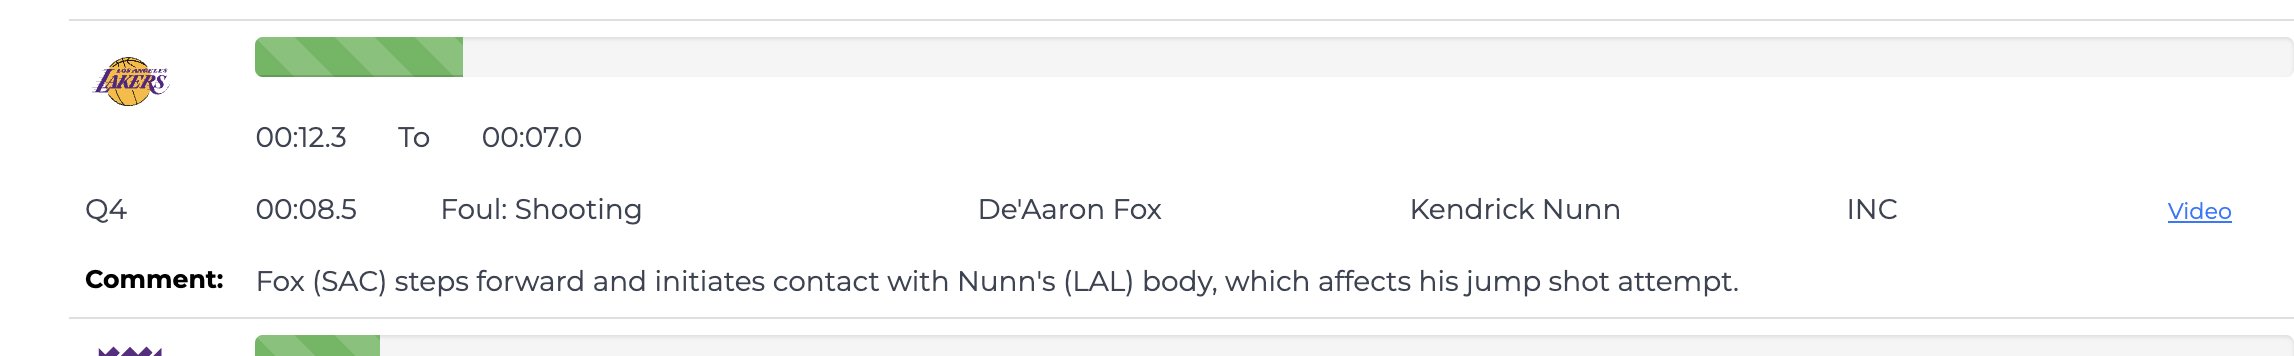 Kendrick Nunn and De'Aaron Fox